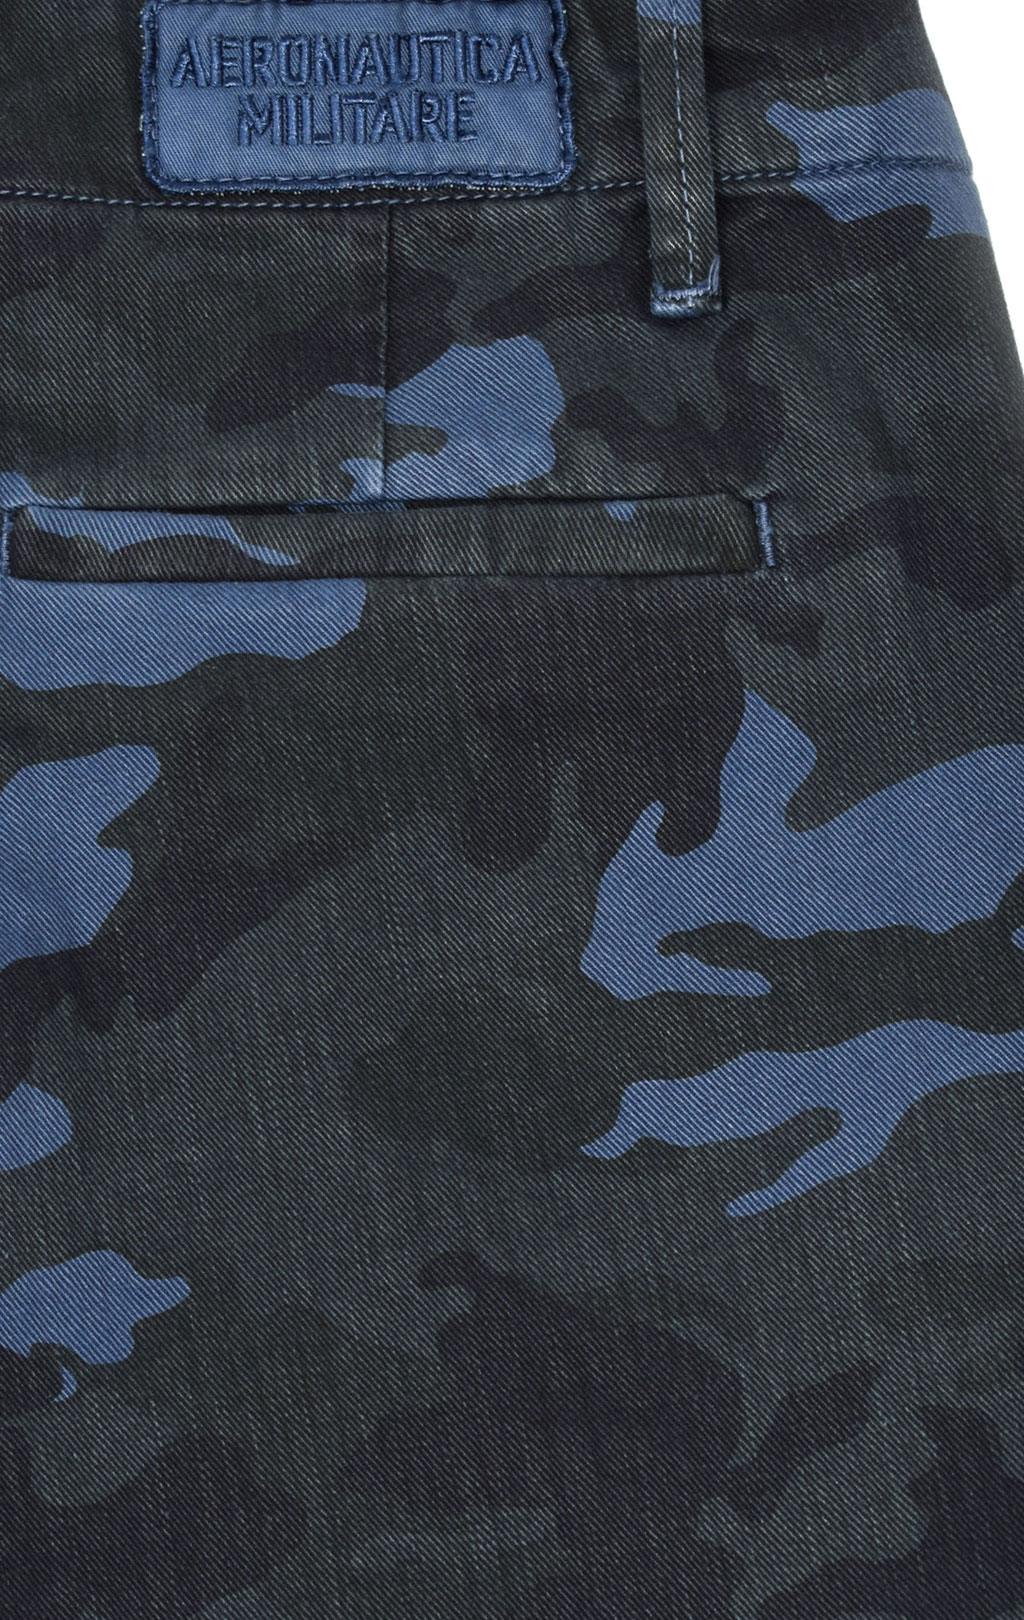 Женские брюки чинос AERONAUTICA MILITARE FW 21/22/TN camouflage sovratinto avio (PA 1460) 